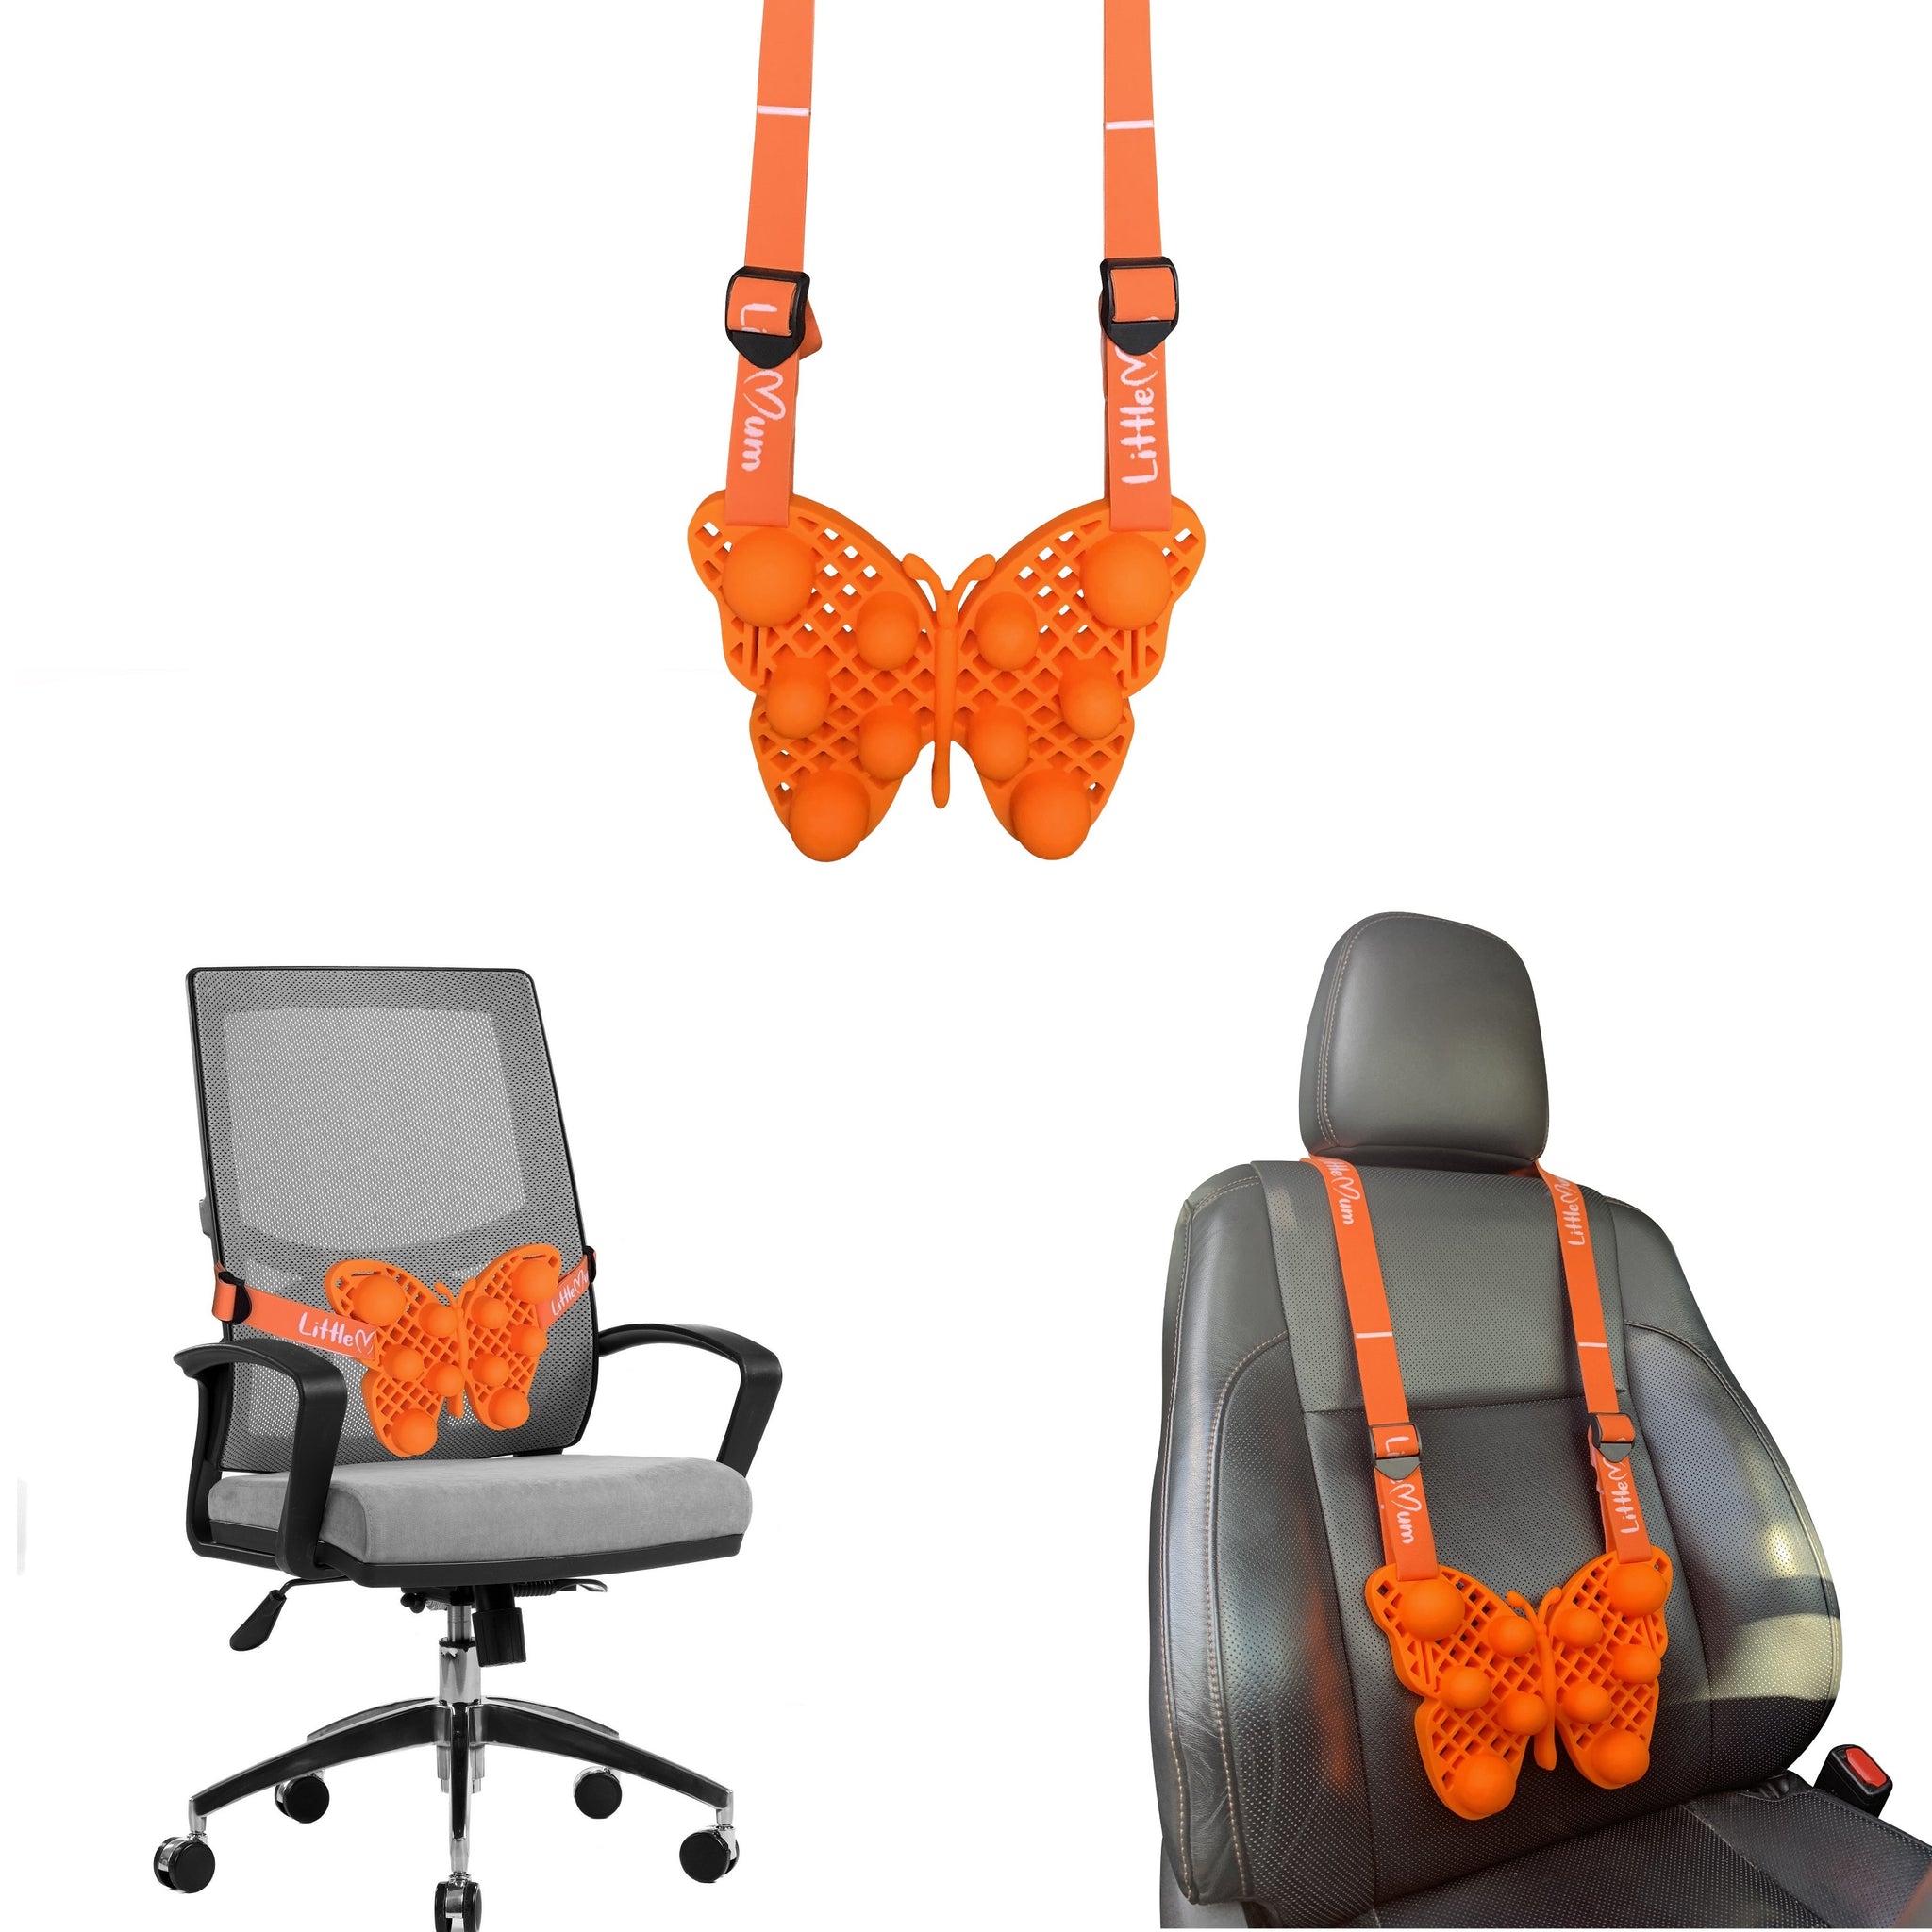 Lumbar Support Pillow For Offices Chair Car Lumbar Support Lumbar